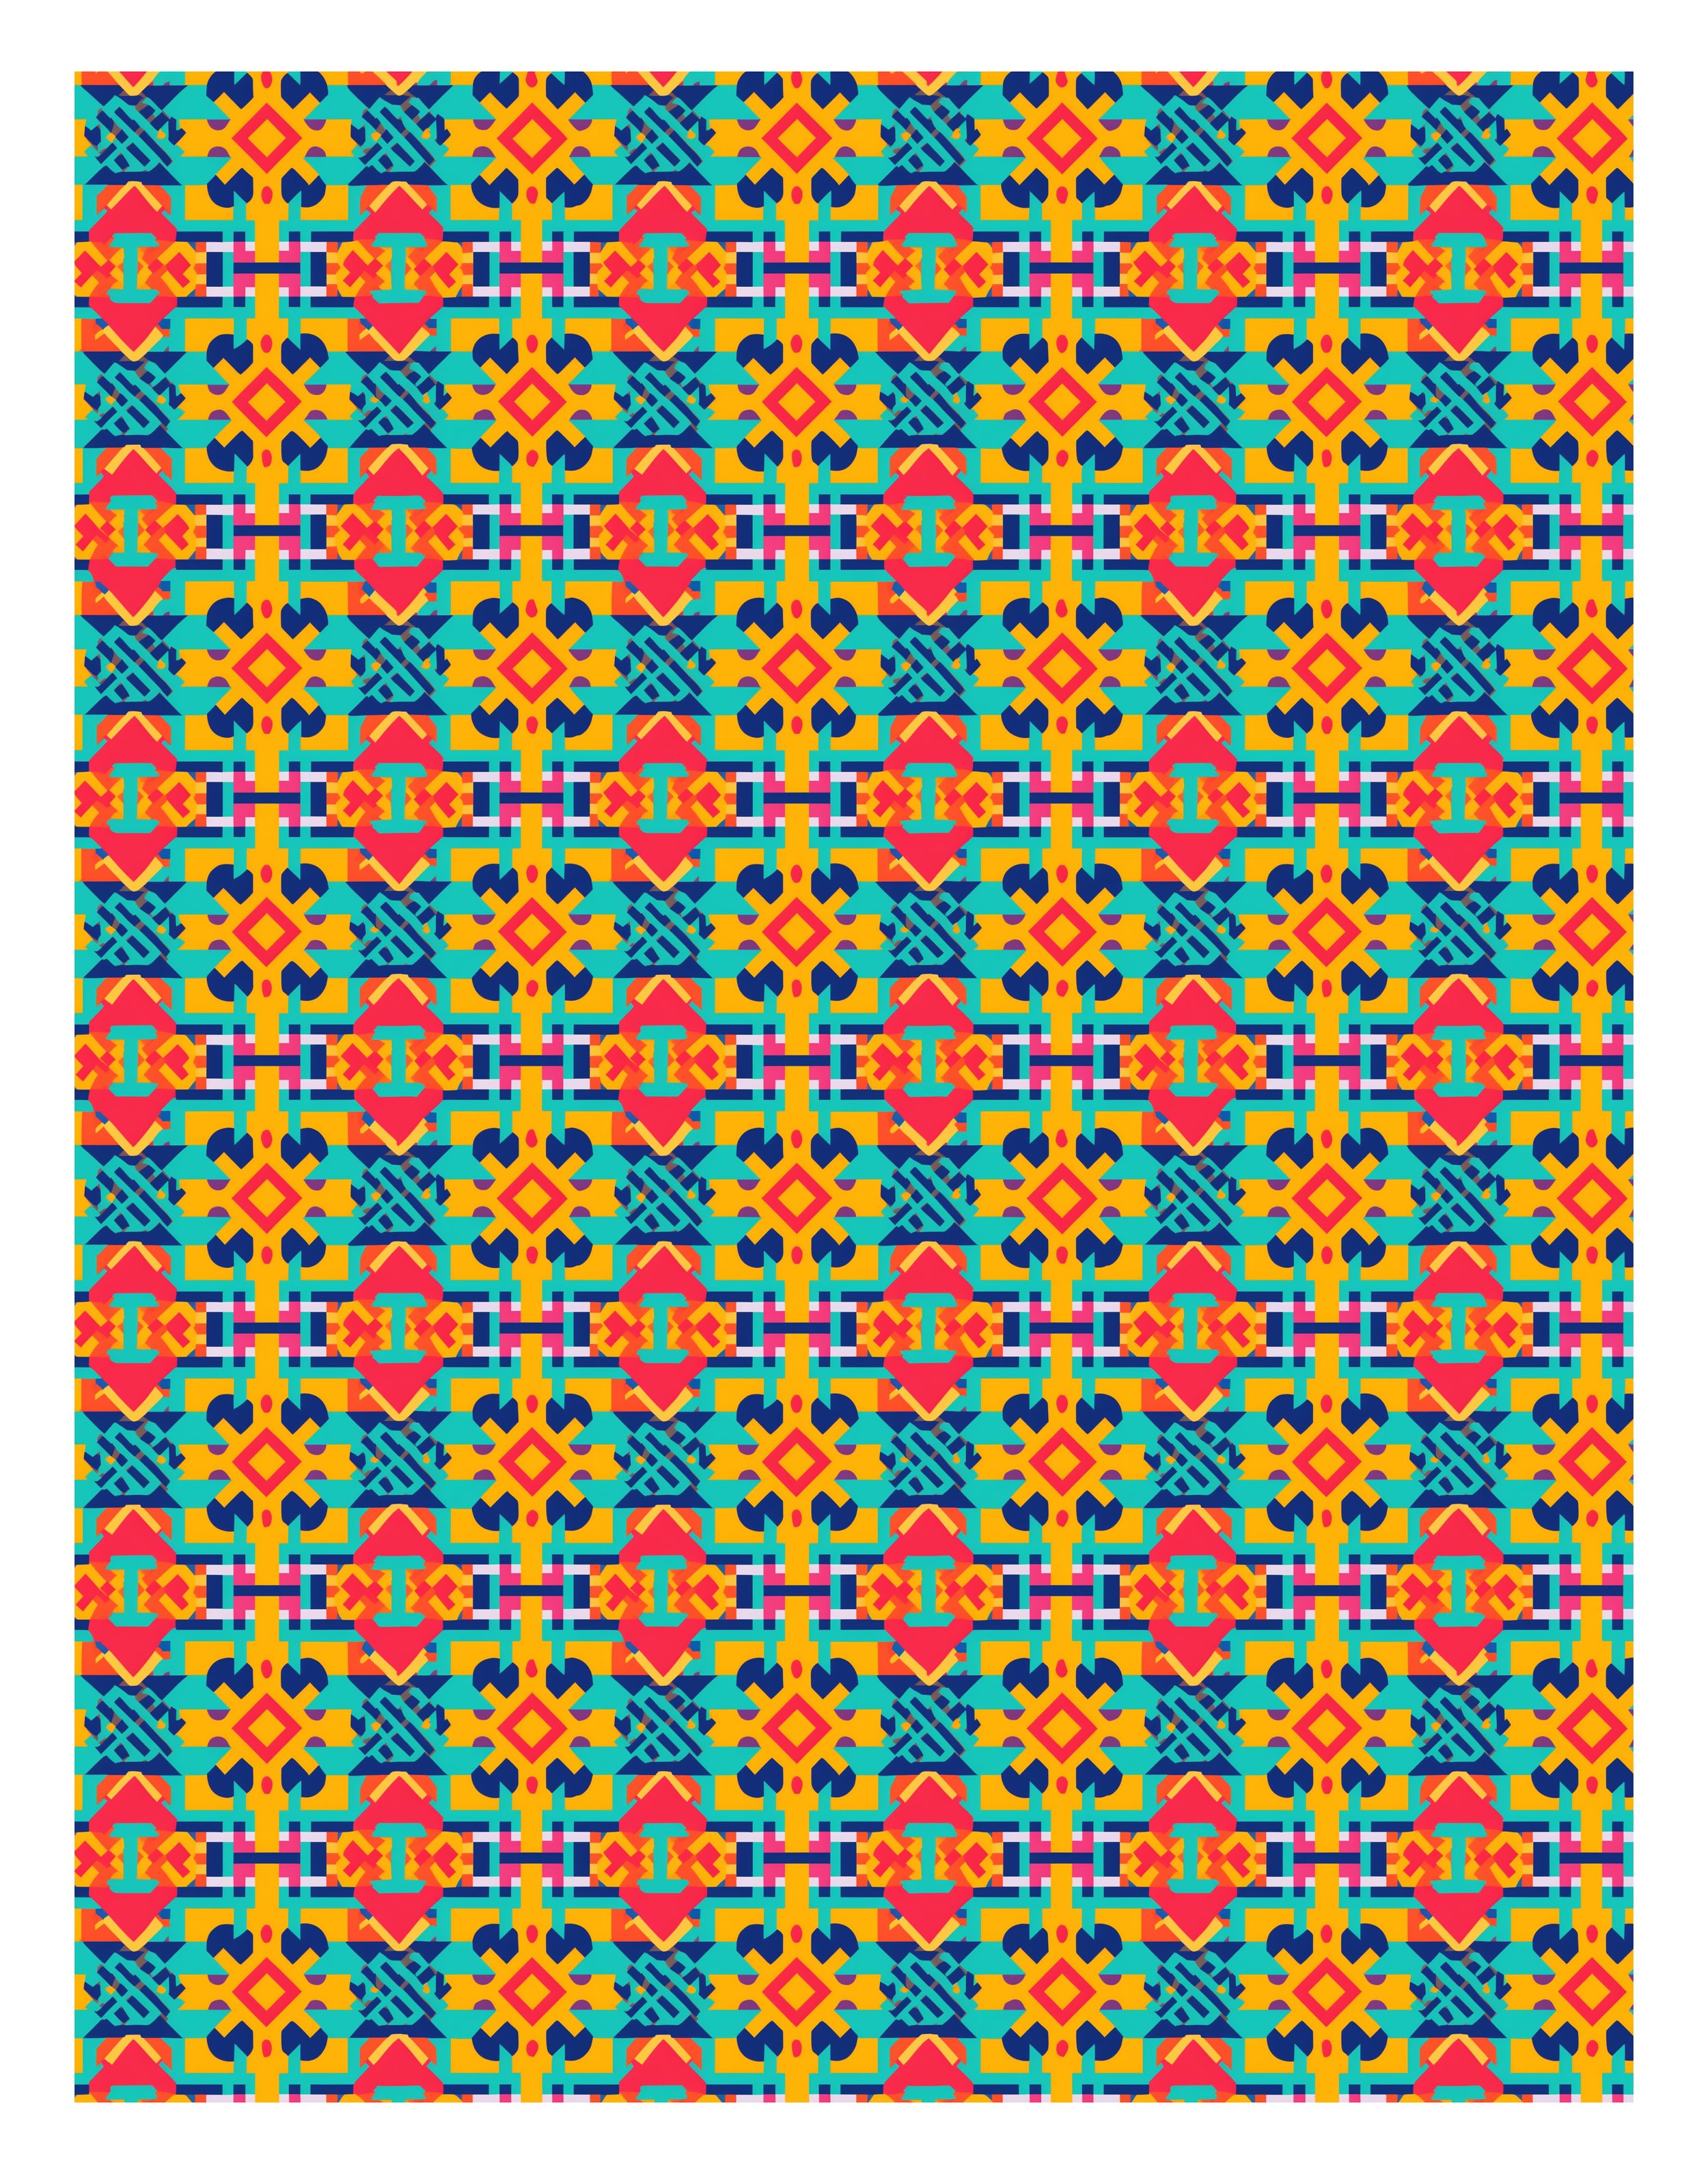 pattern2.jpg